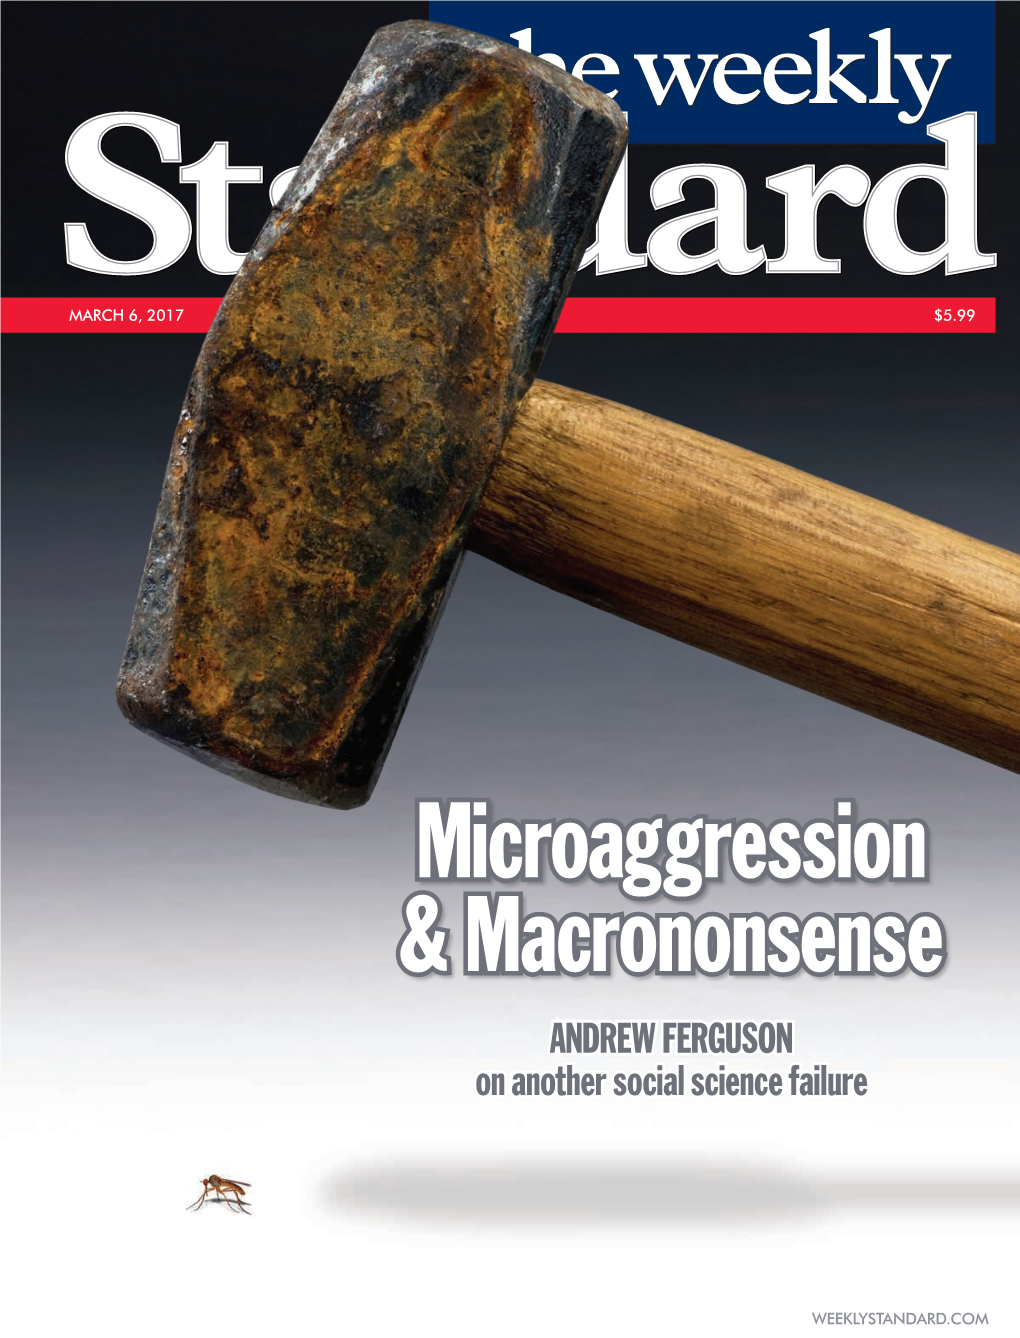 Microaggression & Macrononsense